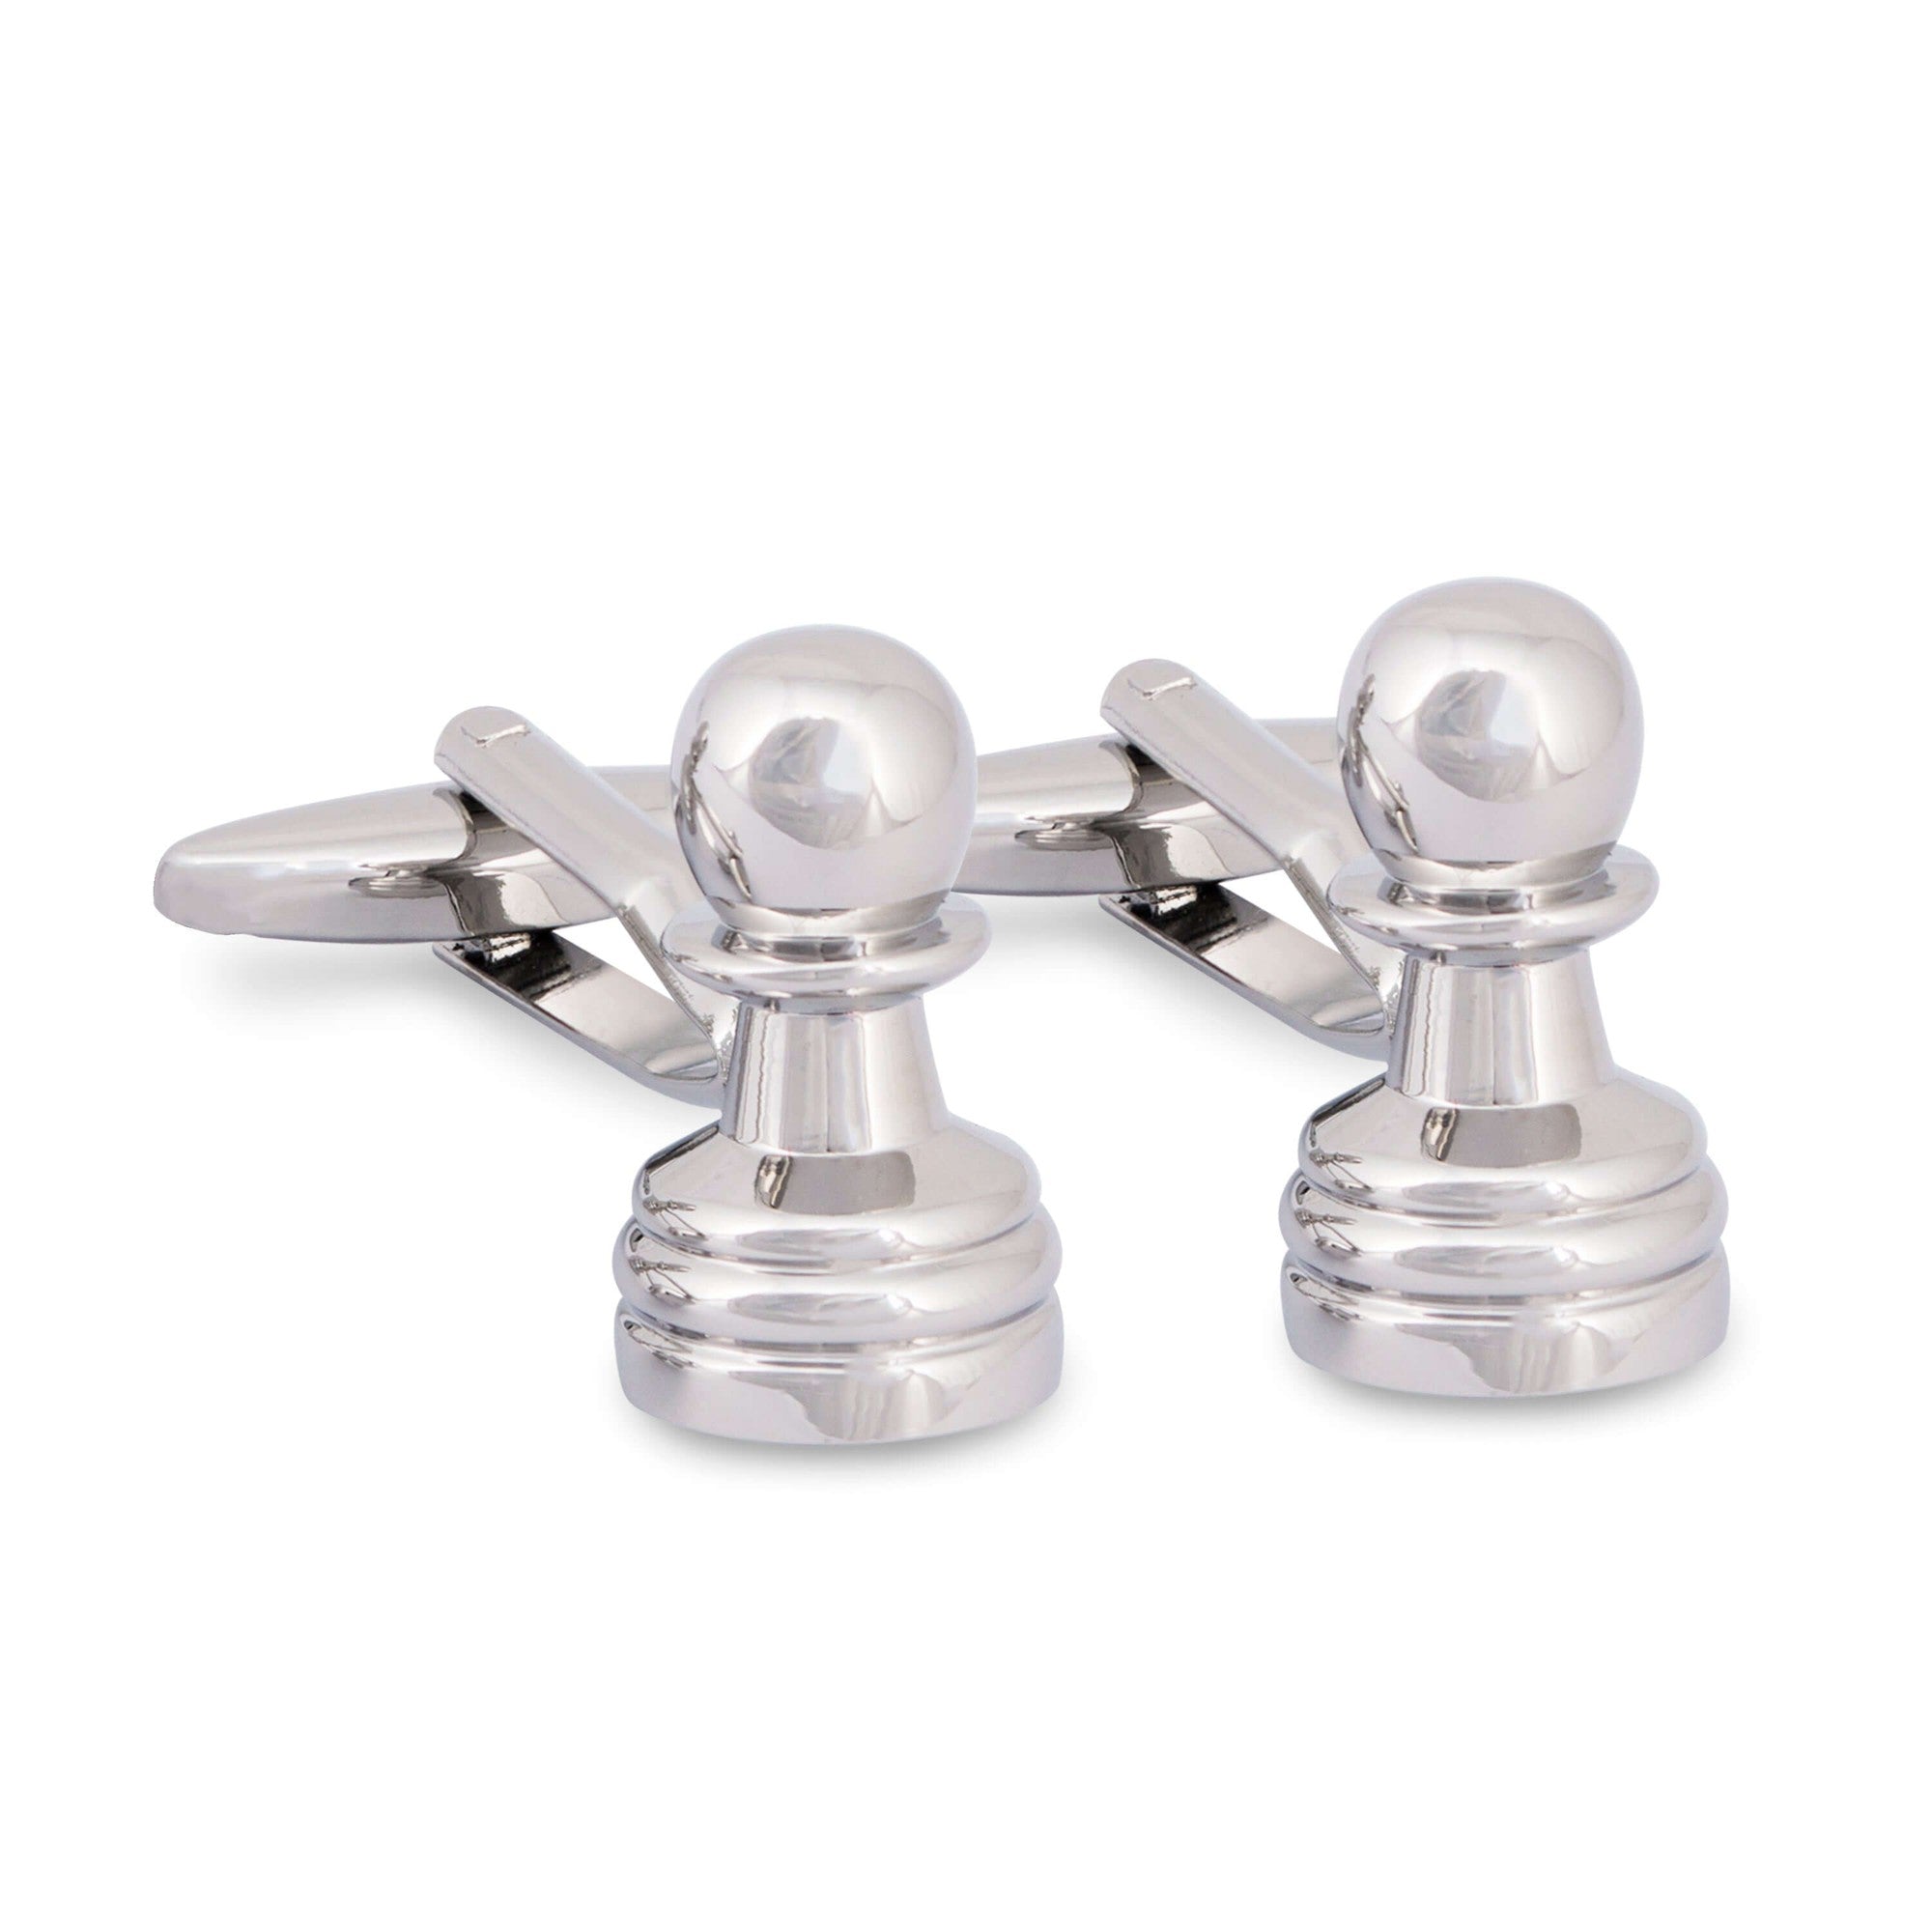 Chess Piece Pawn Cufflinks in Silver-Novelty Cufflinks-MarZthomson-Cufflinks.com.sg